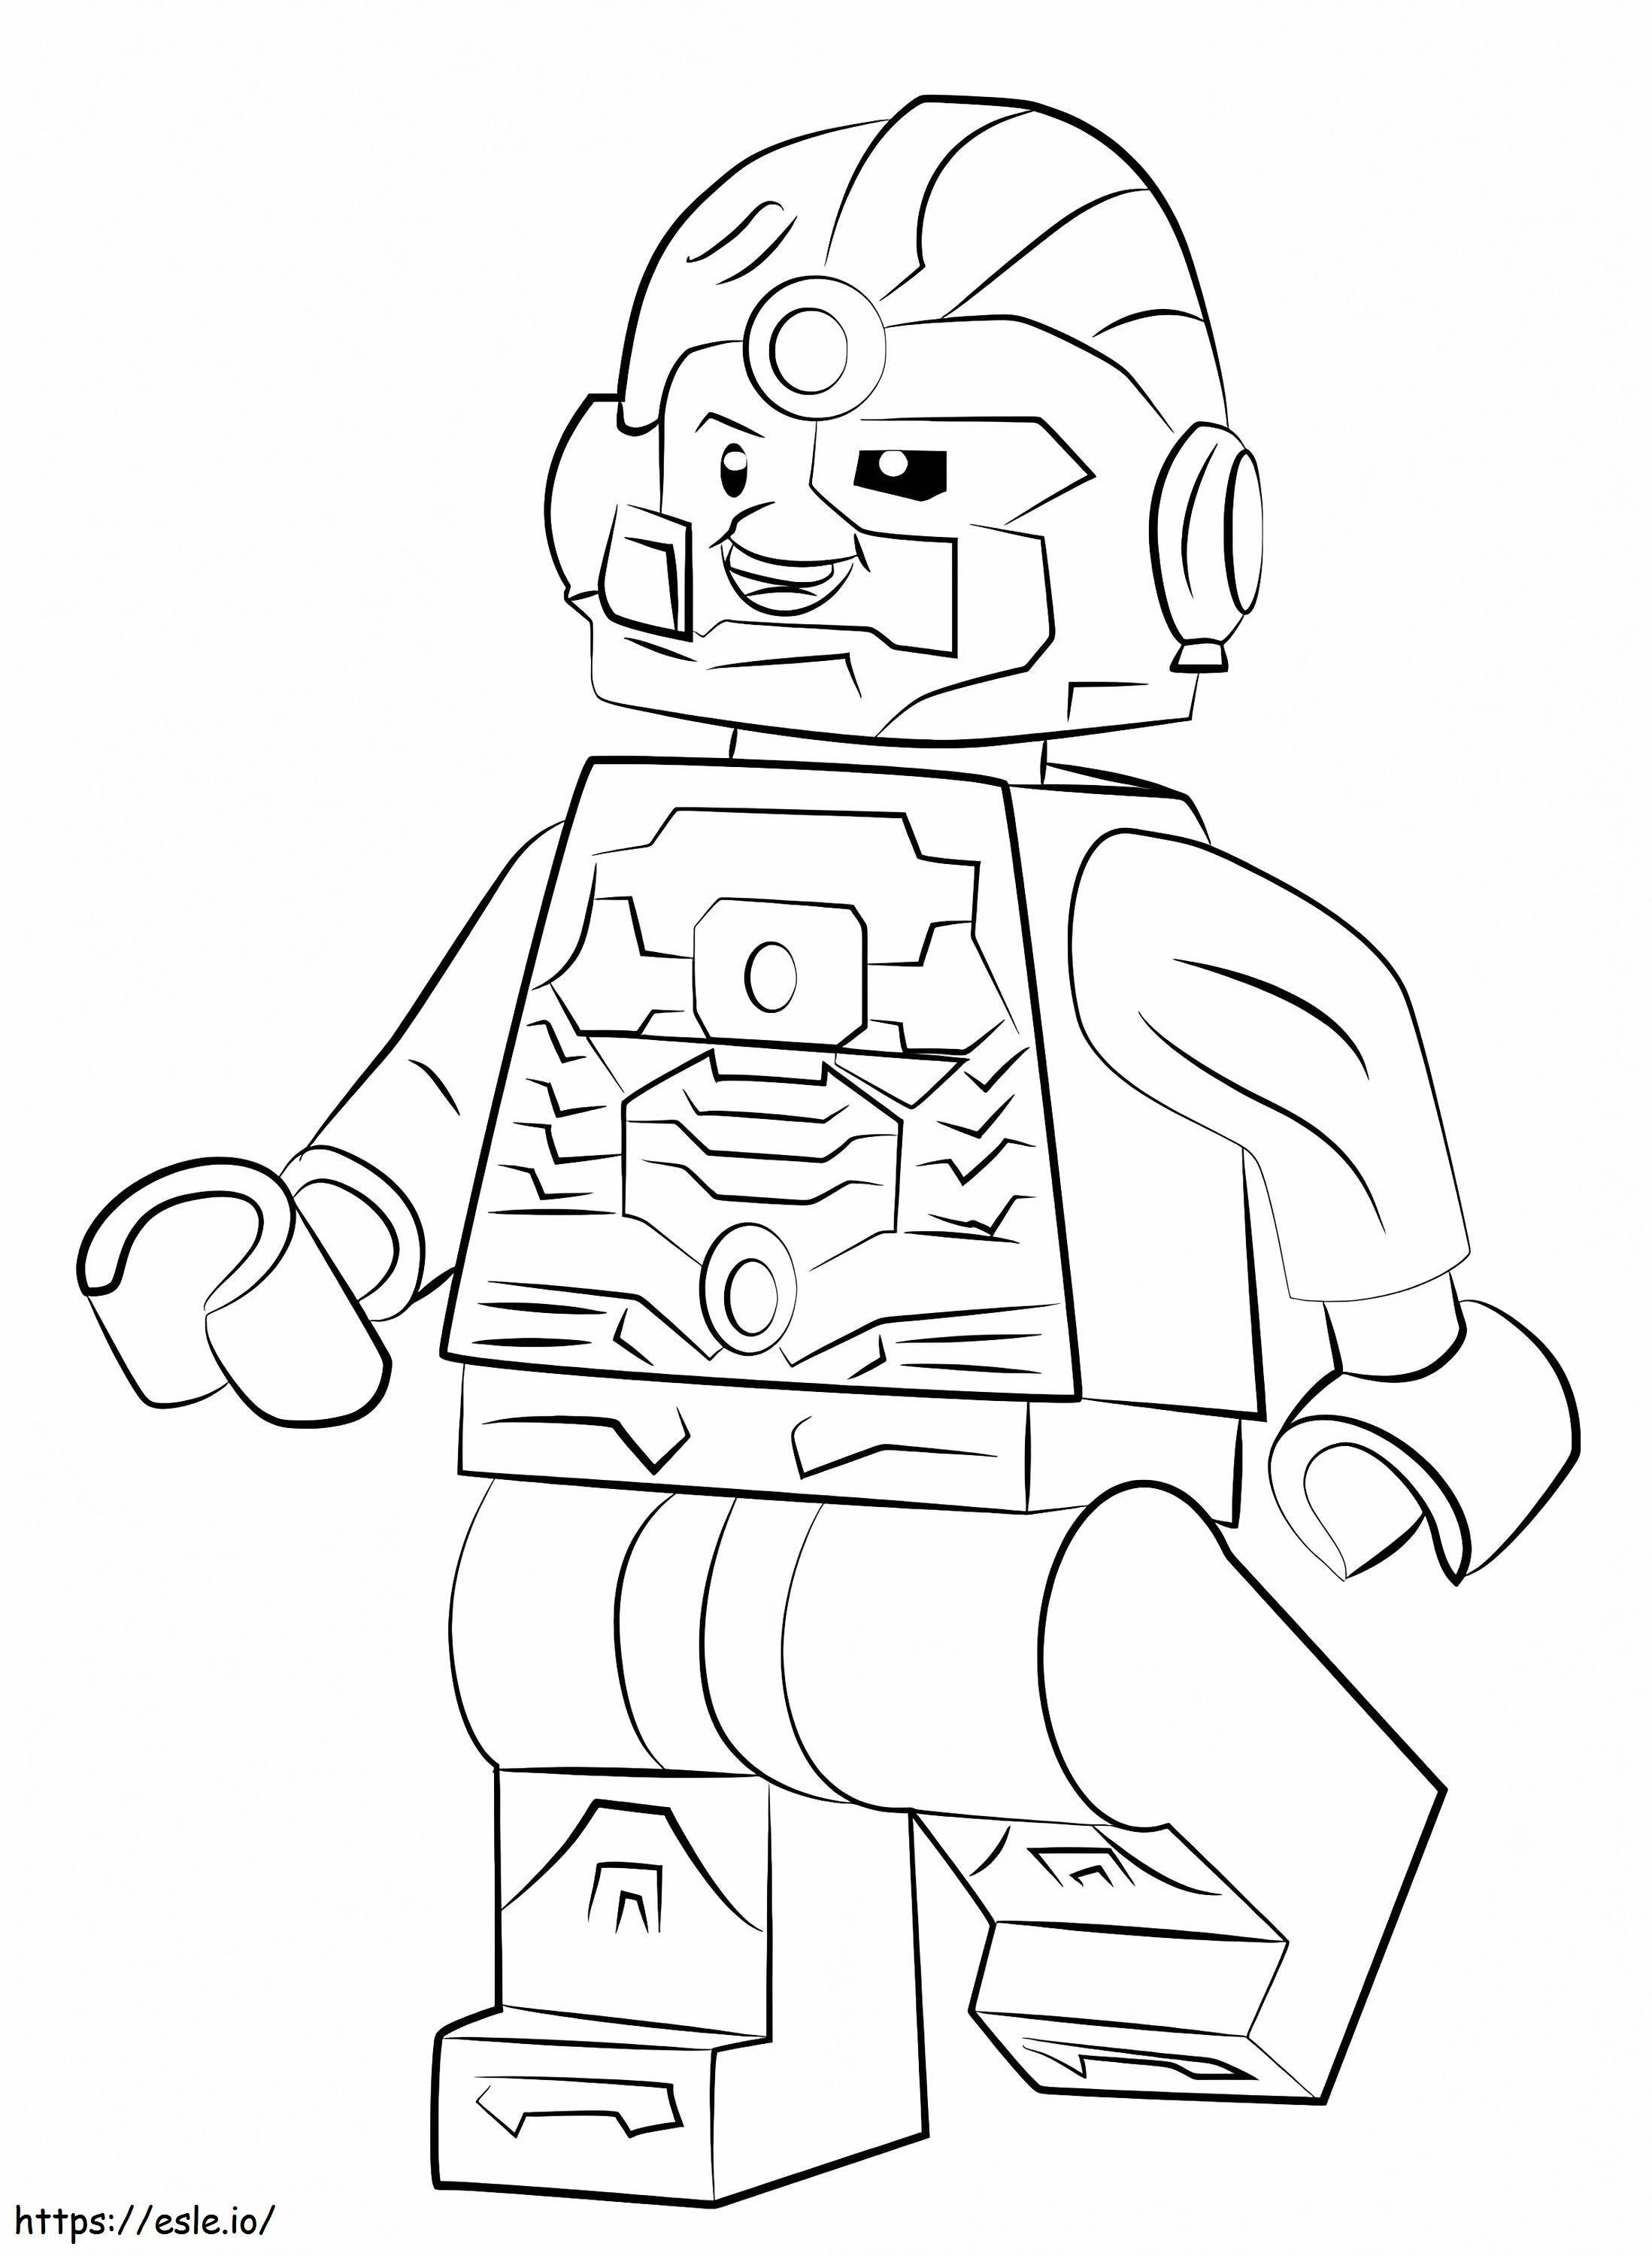 Lego Cyborg Fun coloring page